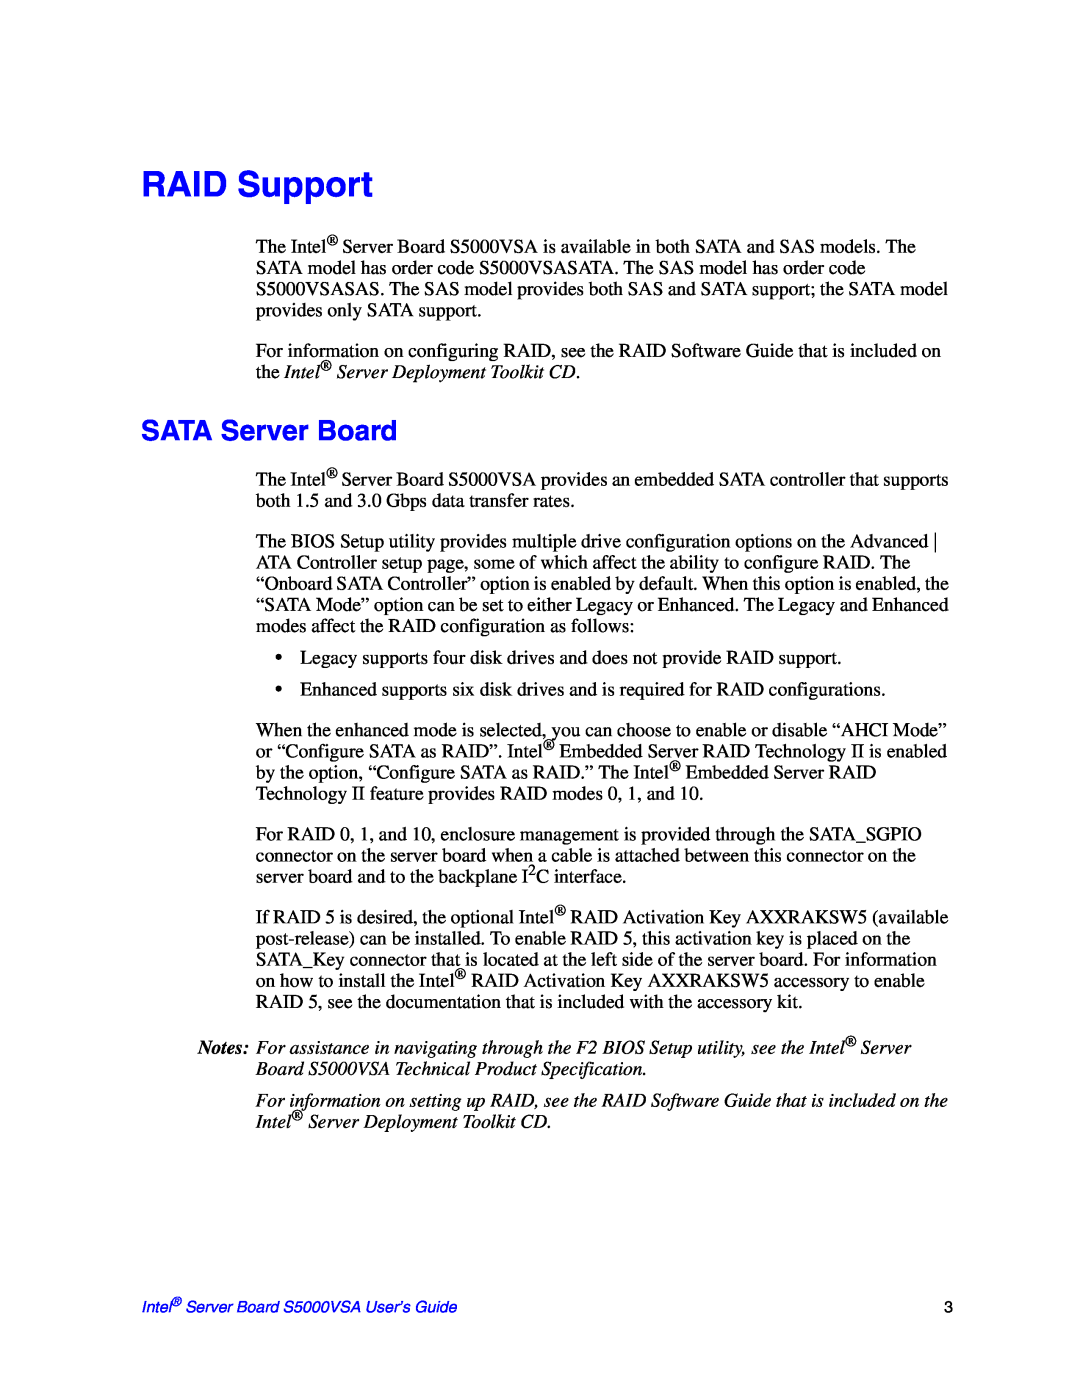 Intel S5000VSA manual RAID Support, SATA Server Board 